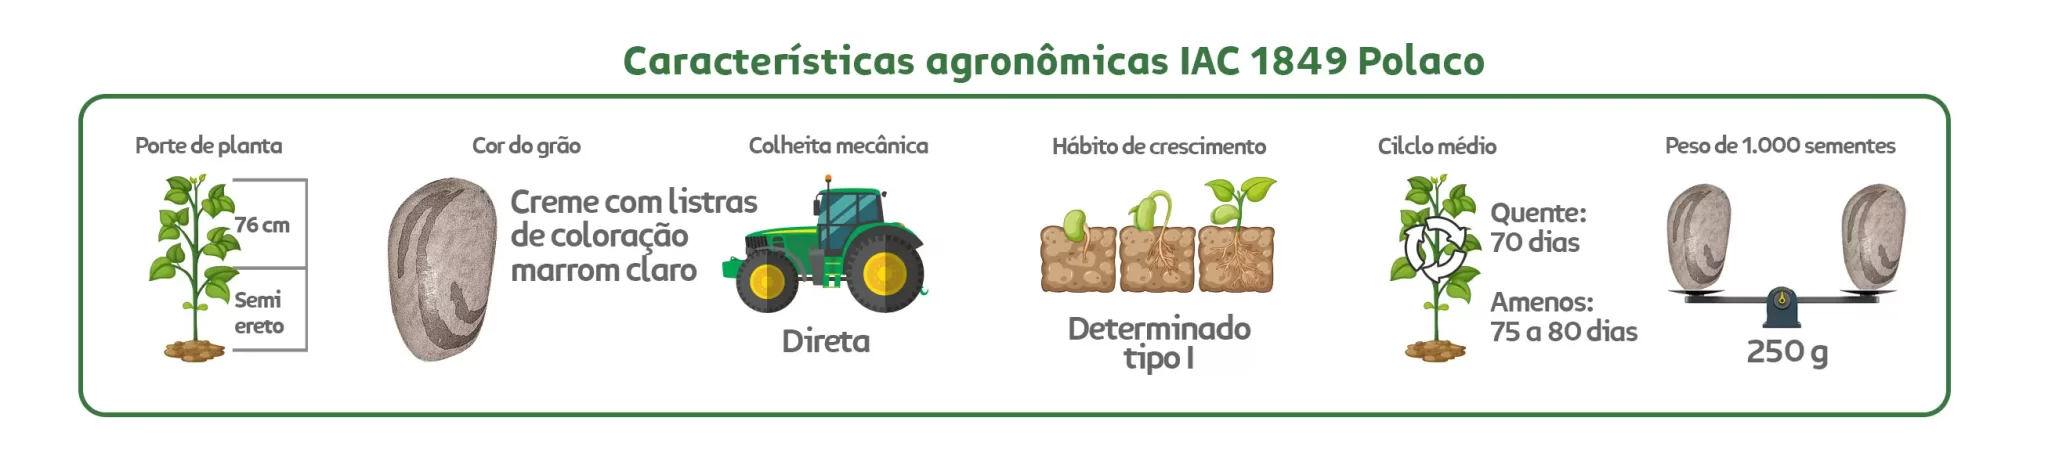 Características agronômicas Feijão Carioca IAC 1940 Polaco